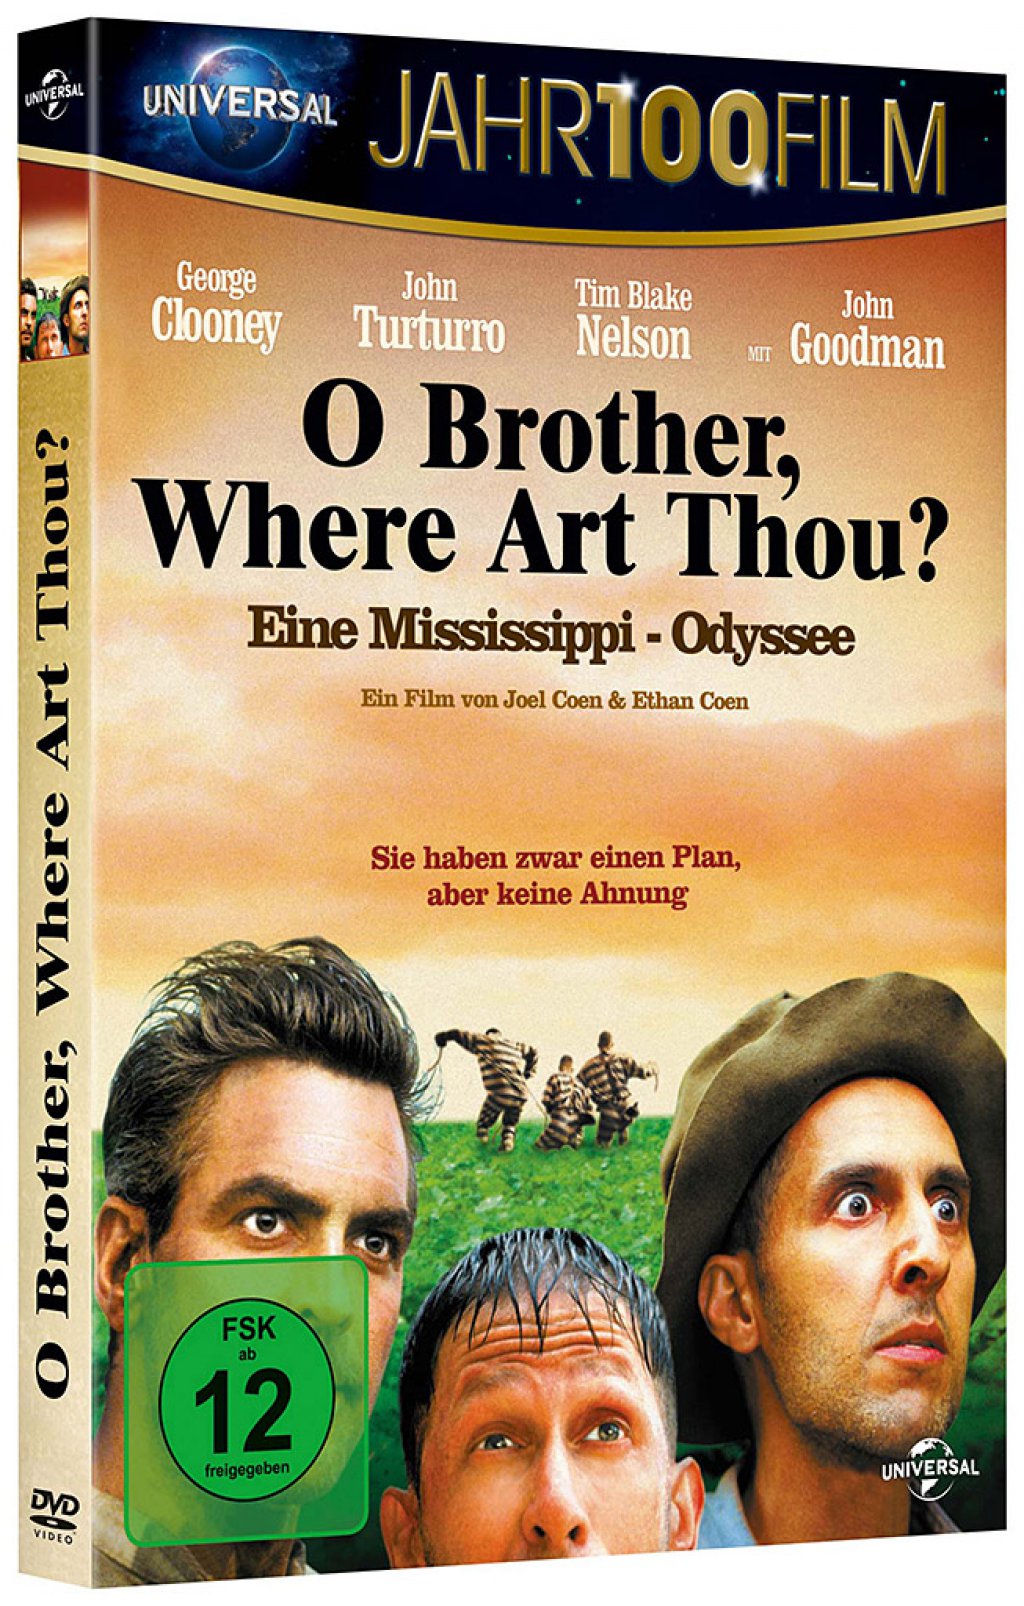 O Brother, Where Art Thou? - Eine Mississippi-Odyssee - Jahr100Film (DVD) - O Brother Where Art Thou Eine Mississippi Odyssee